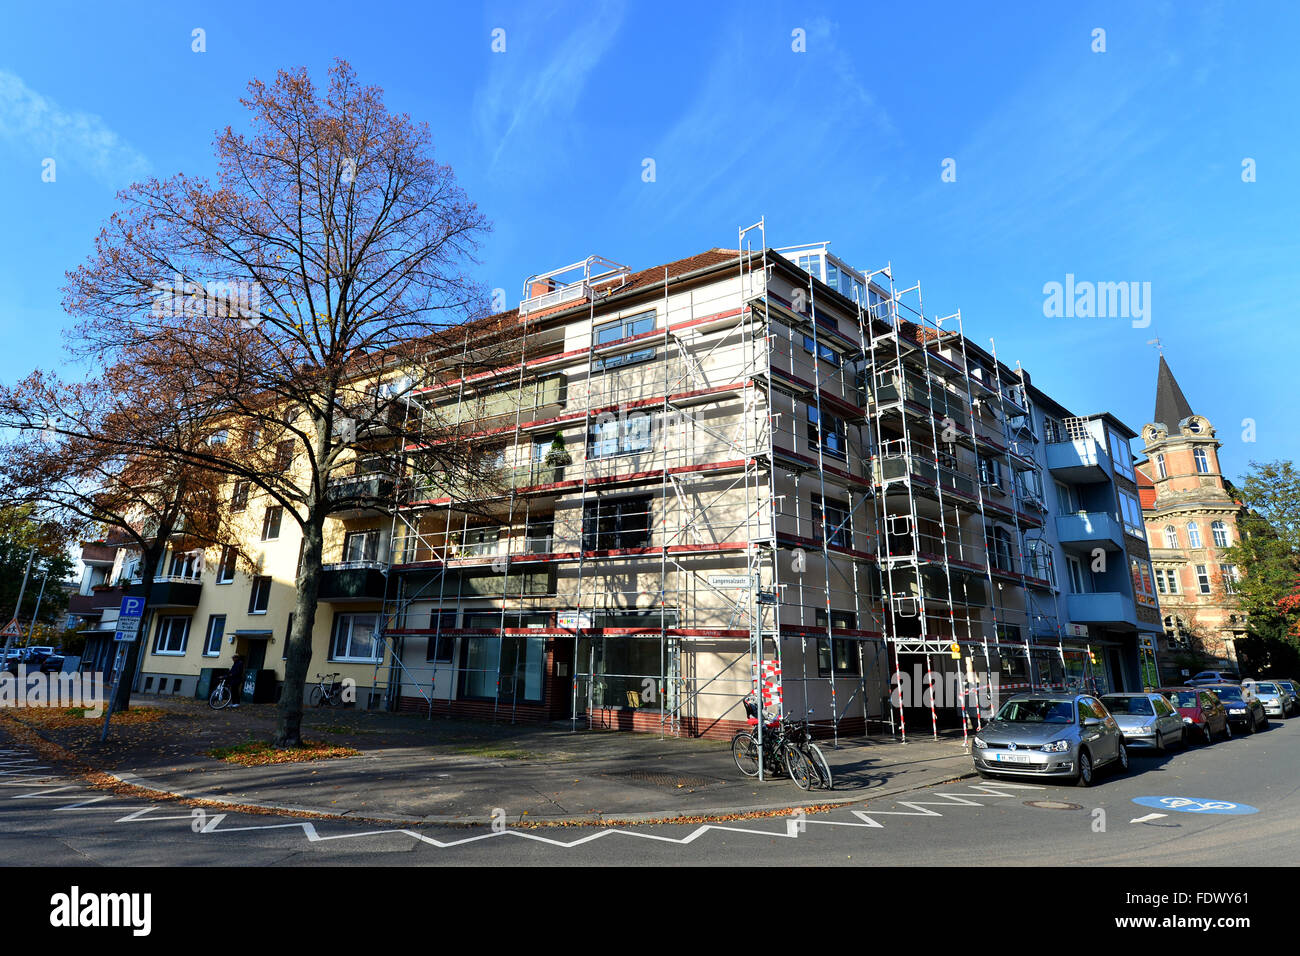 Hannover, Germany, eingeruestetes multiple dwelling Stock Photo